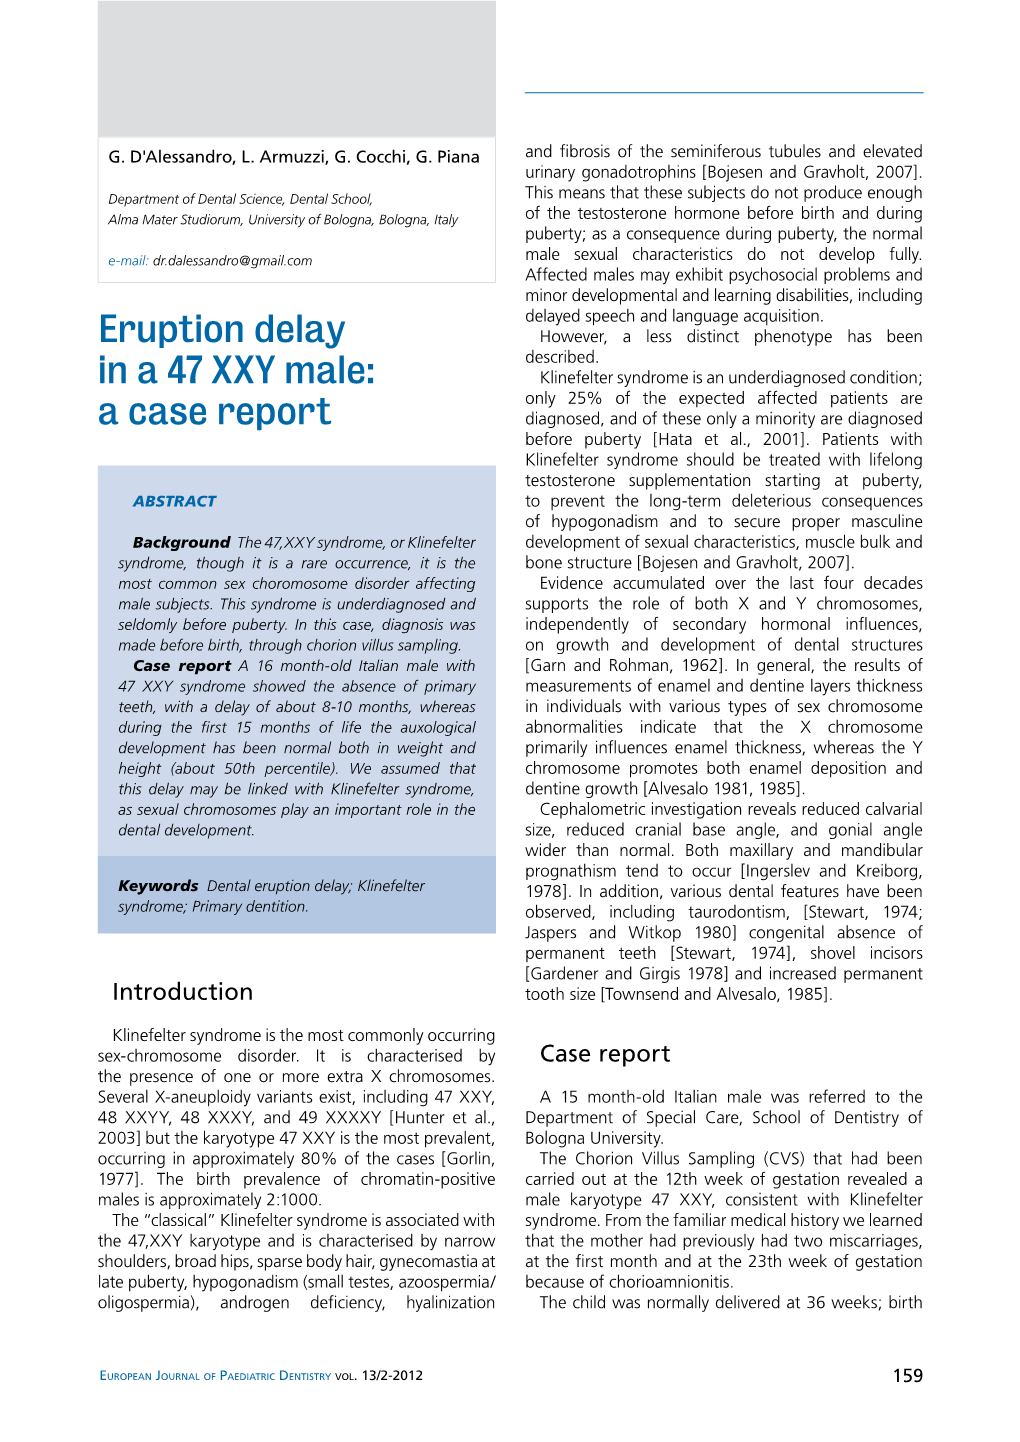 Eruption Delay in a 47 XXY Male: a Case Report